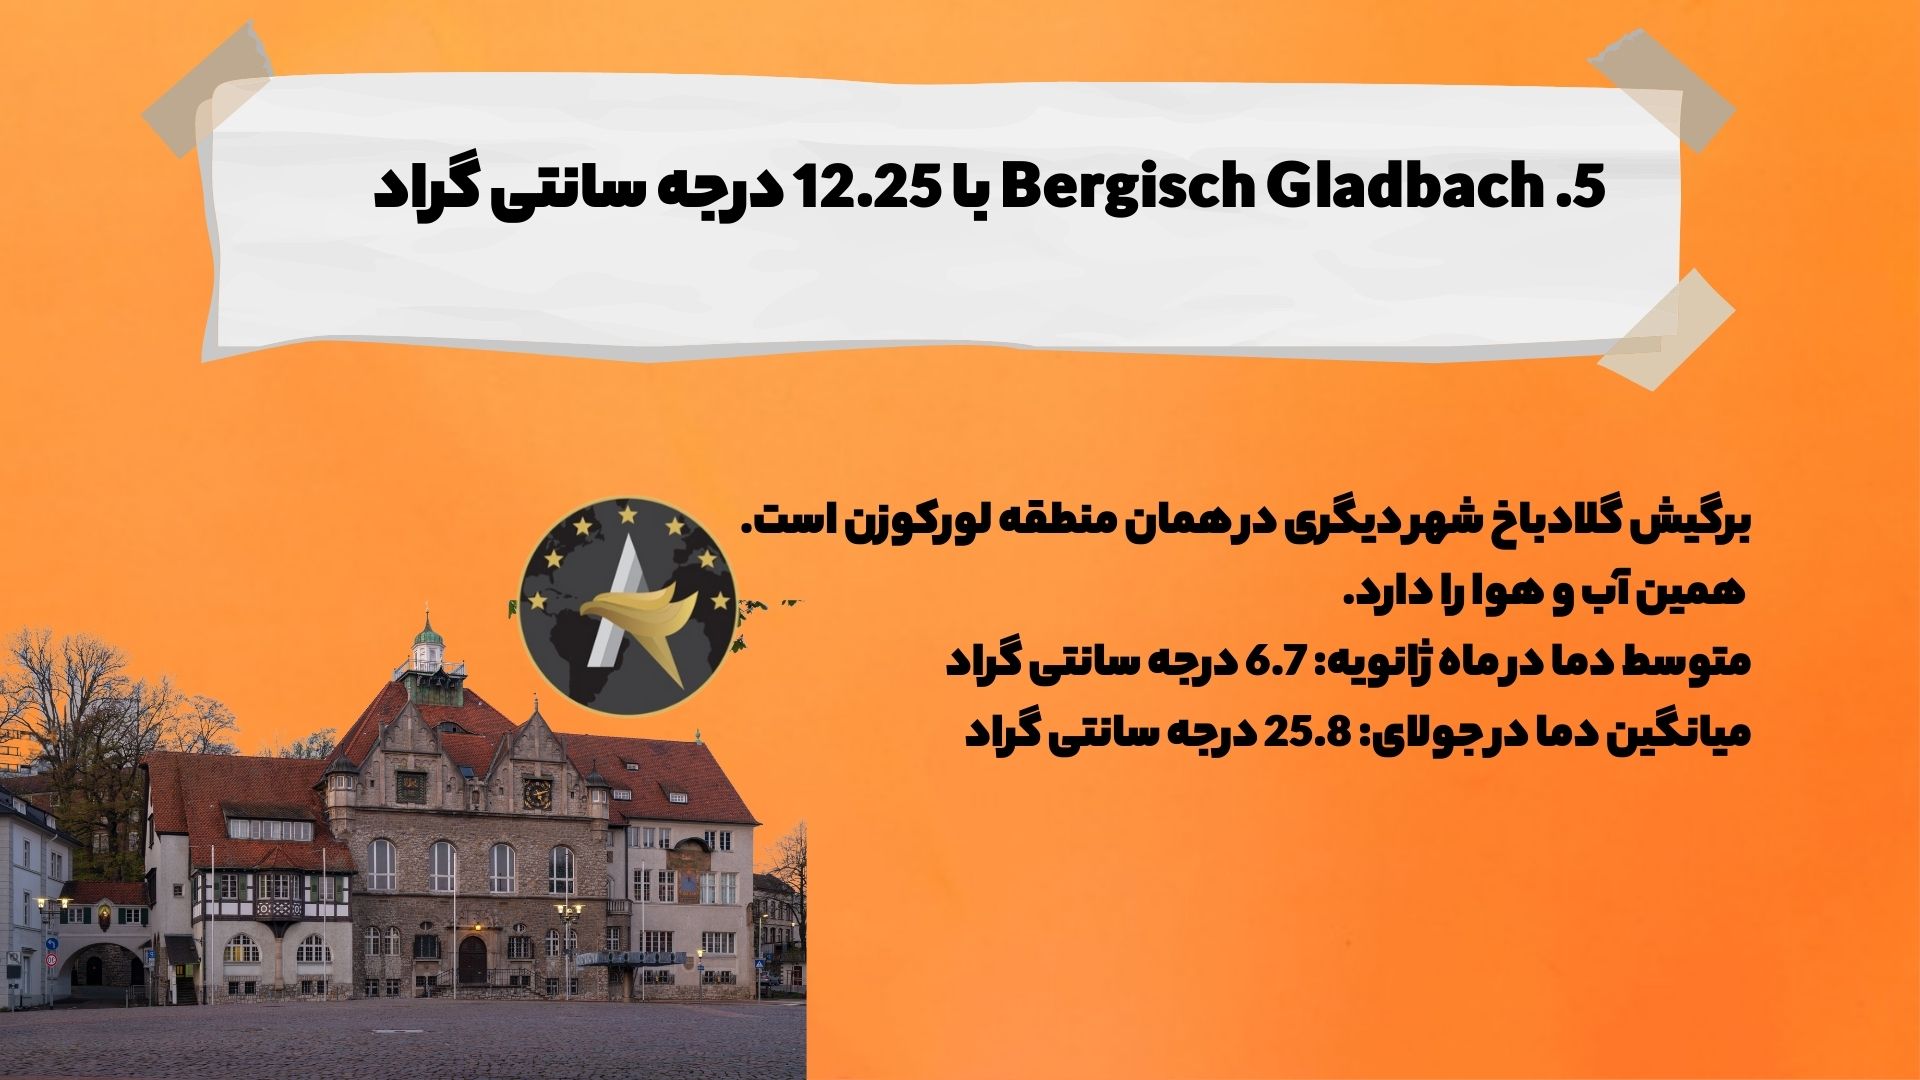 5. Bergisch Gladbach با 12.25 درجه سانتی گراد